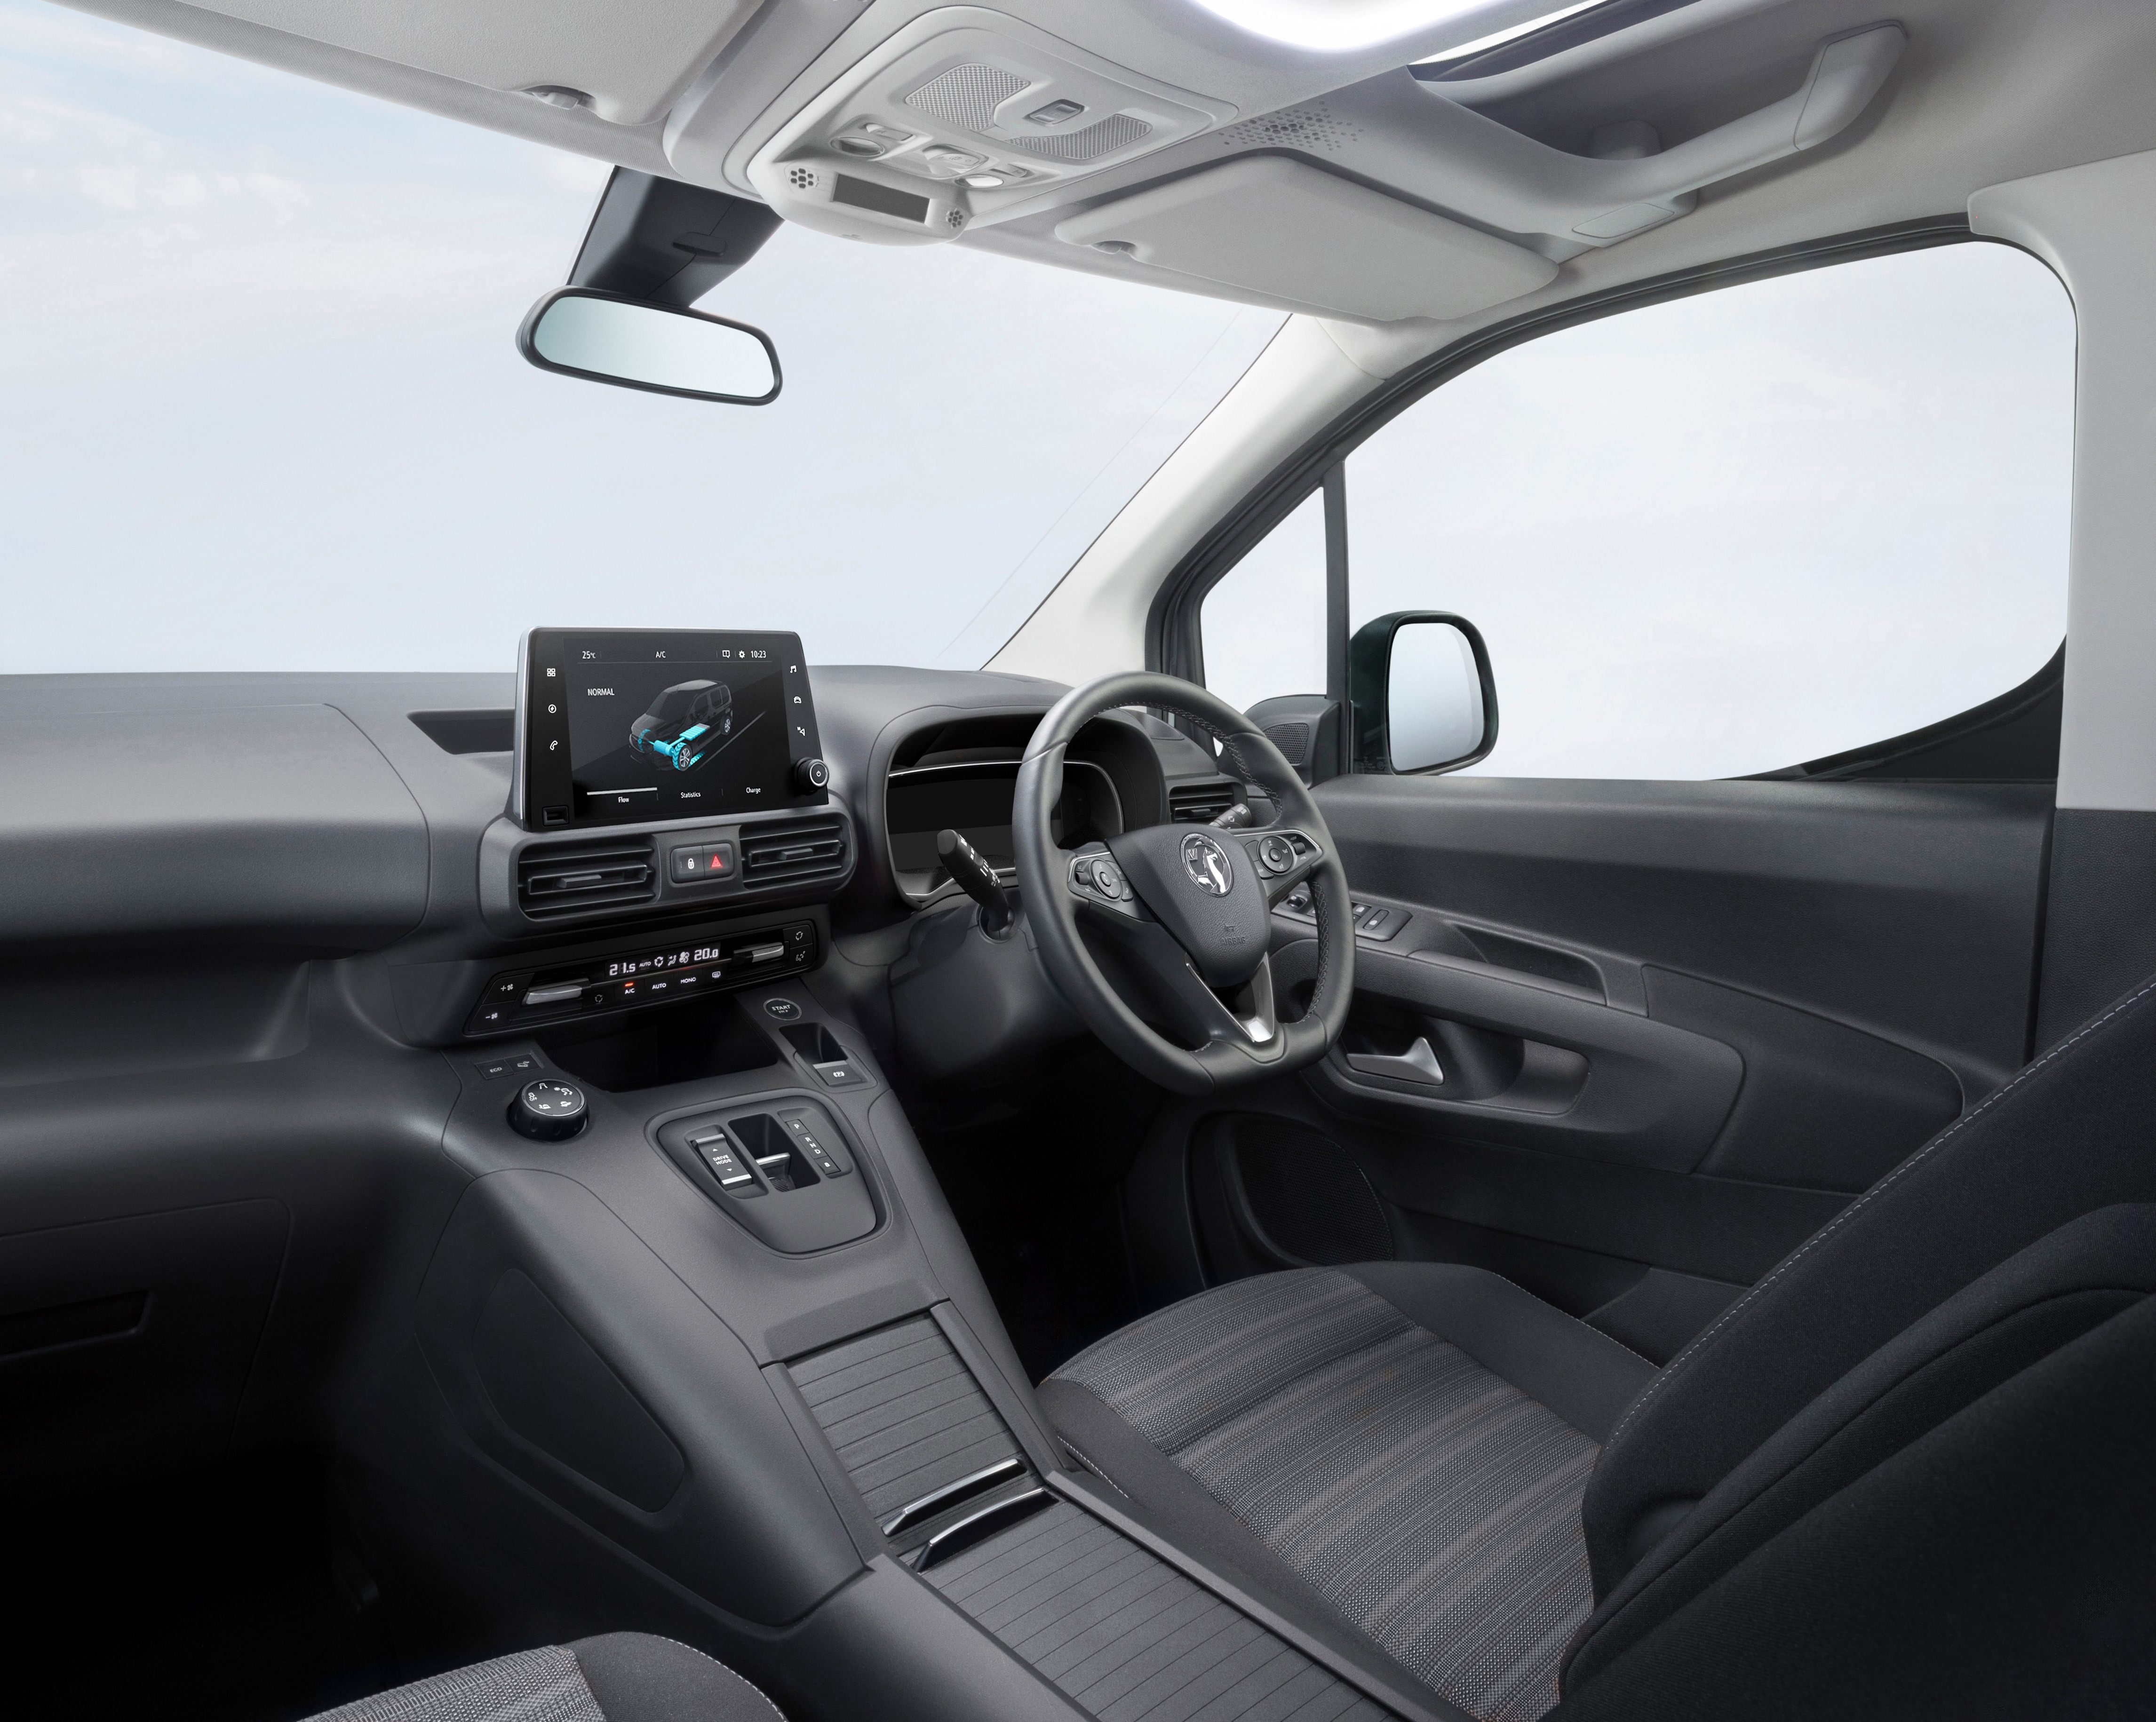 Vauxhall Combo-e interior